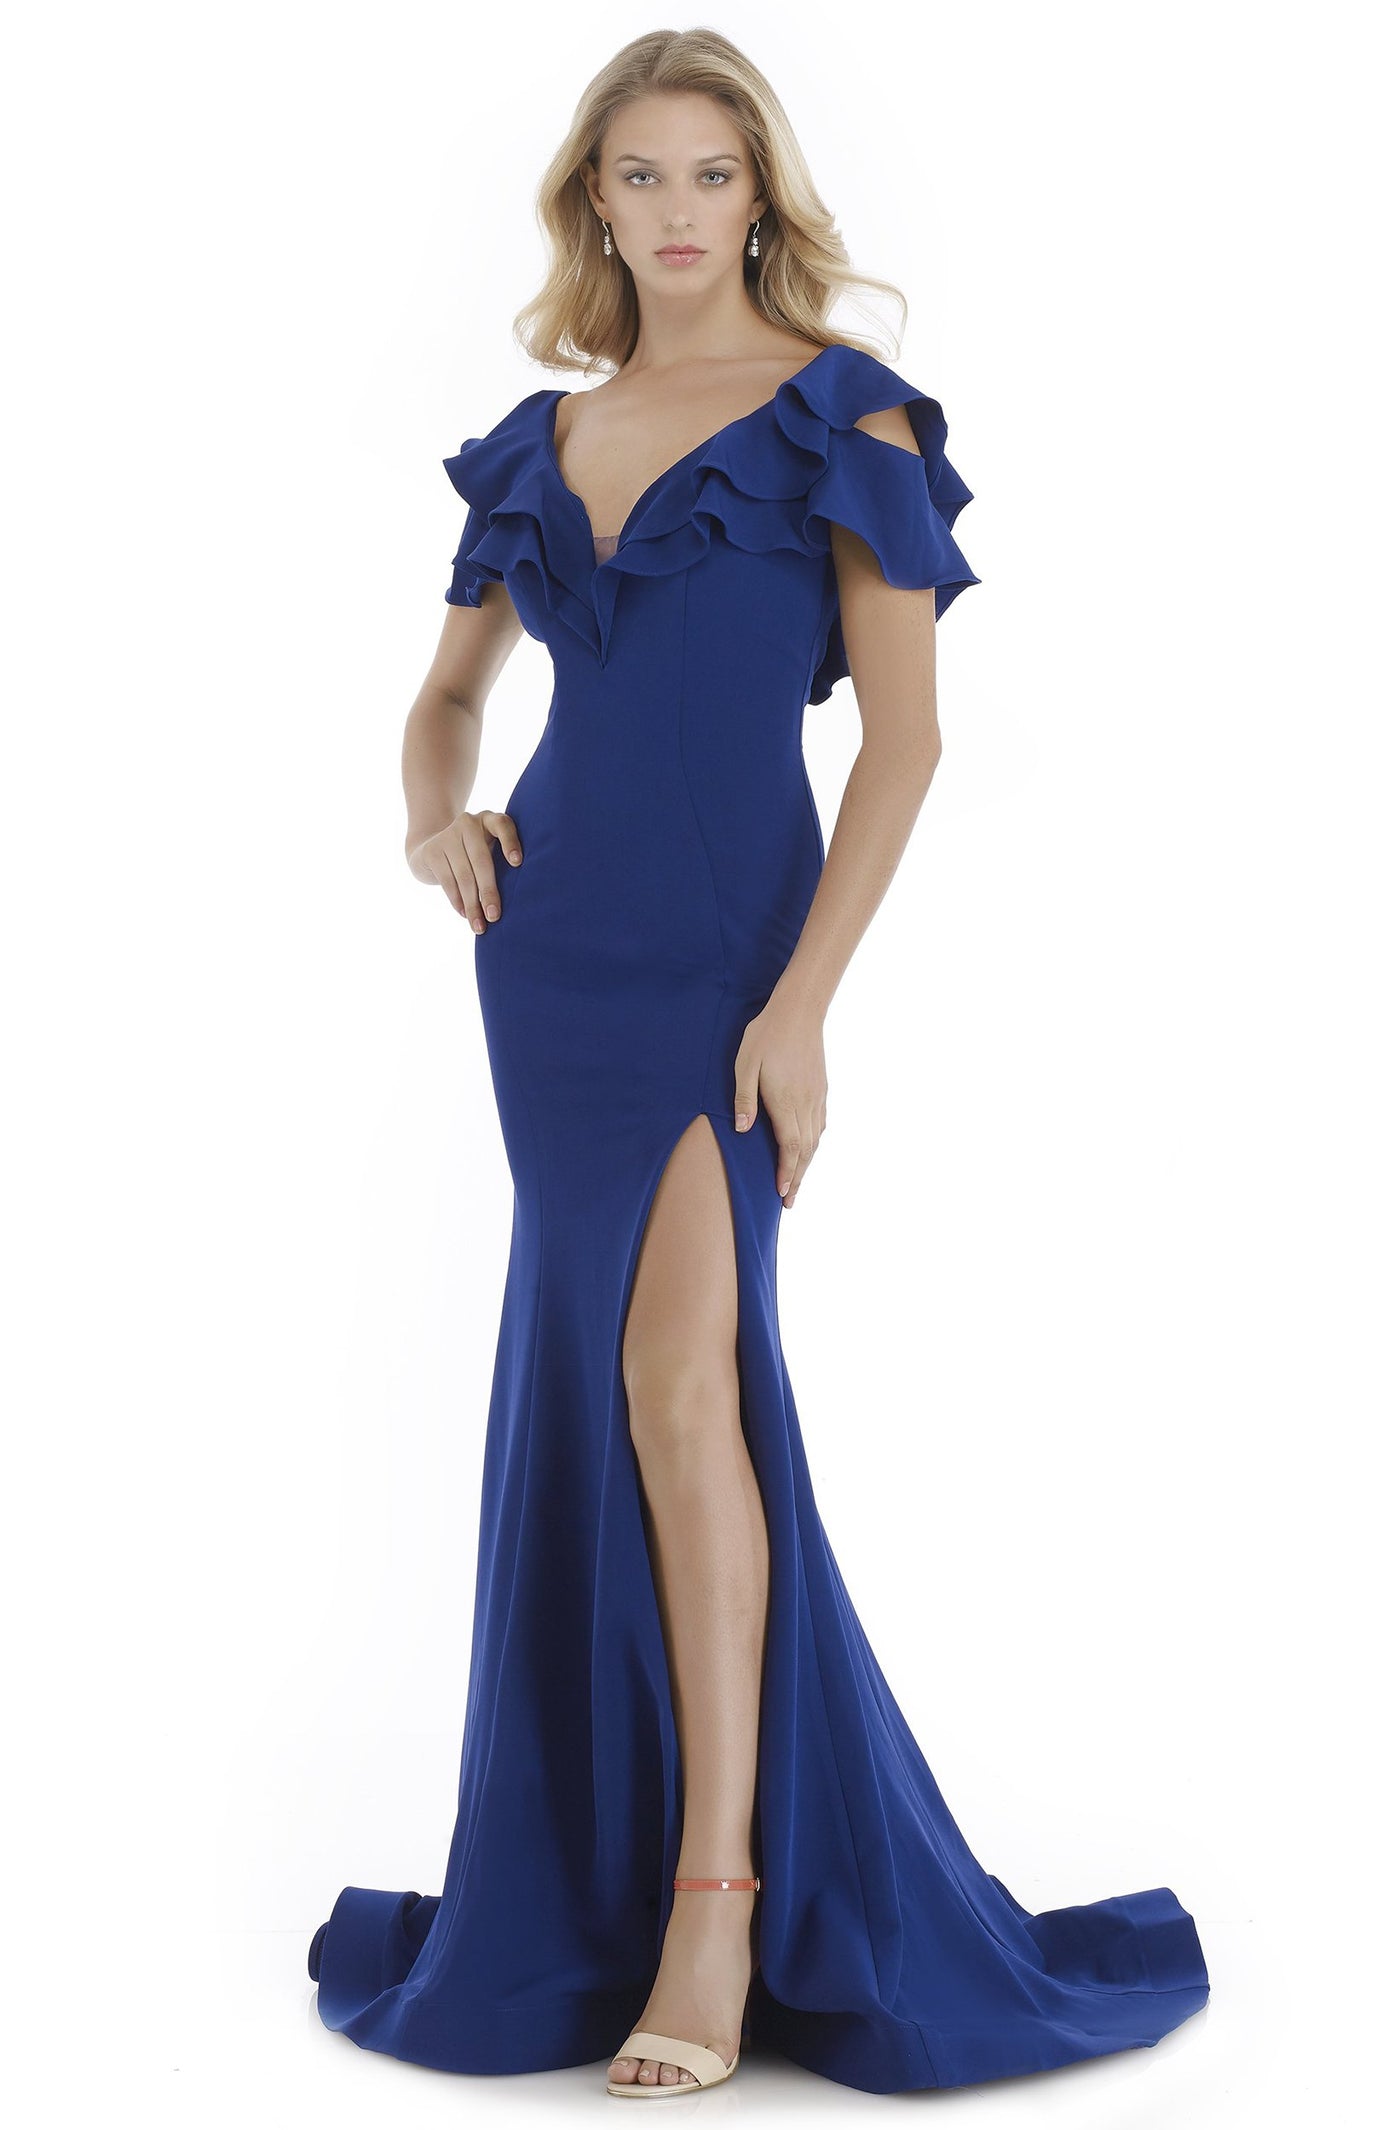 Morrell Maxie - 16064 Ruffled Plunging V-neck Mermaid Dress in Blue